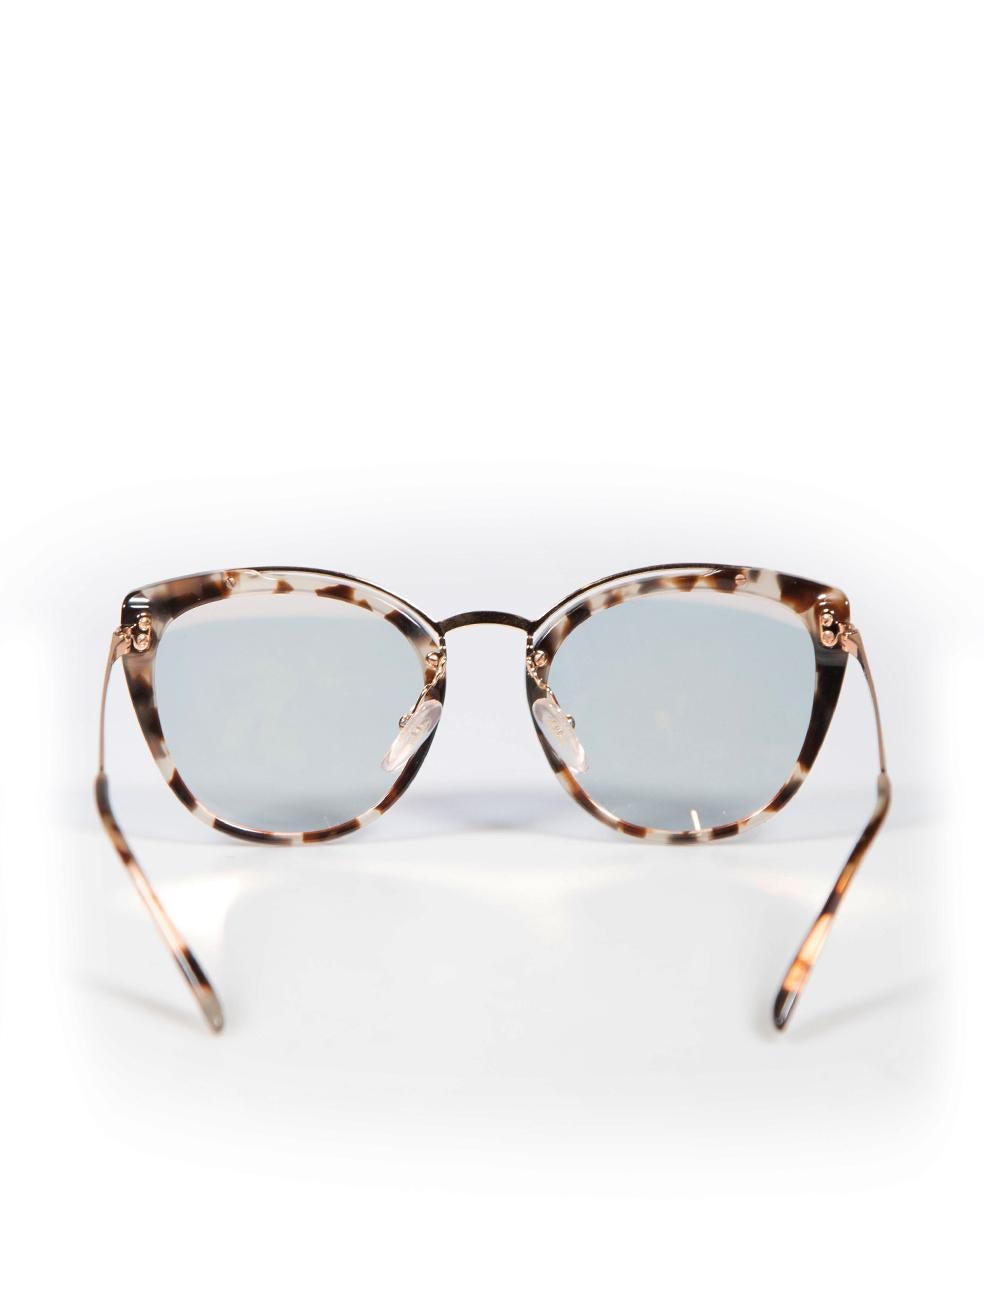 Prada Brown Tortoiseshell SPR 20U Cat Eye Sunglasses In Good Condition For Sale In London, GB